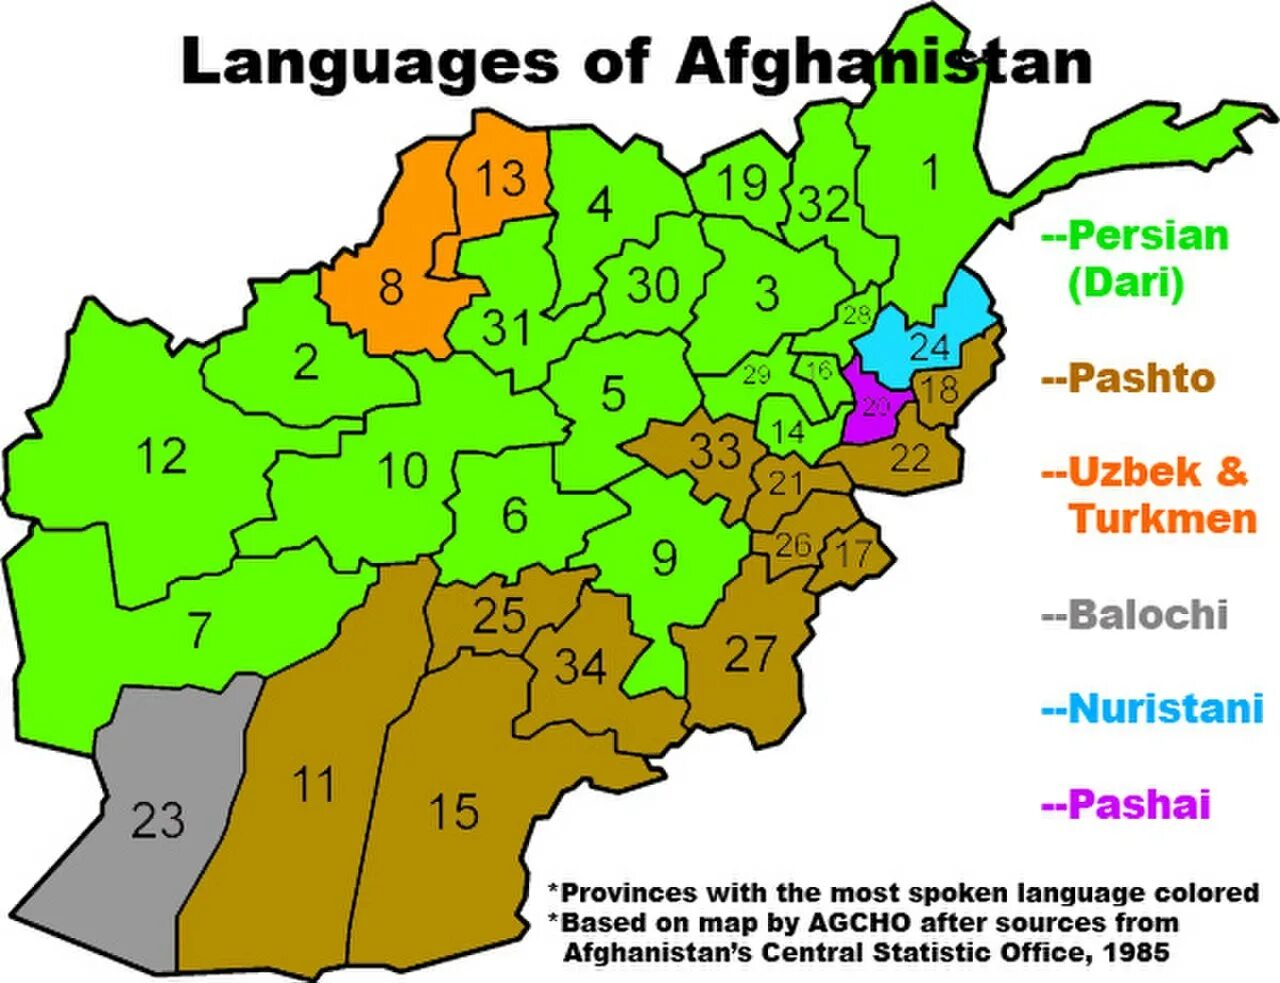 Дари язык какой. Народы Афганистана карта. Языковая карта Афганистана. Карта этносов Афганистана. Население Афганистана карта.